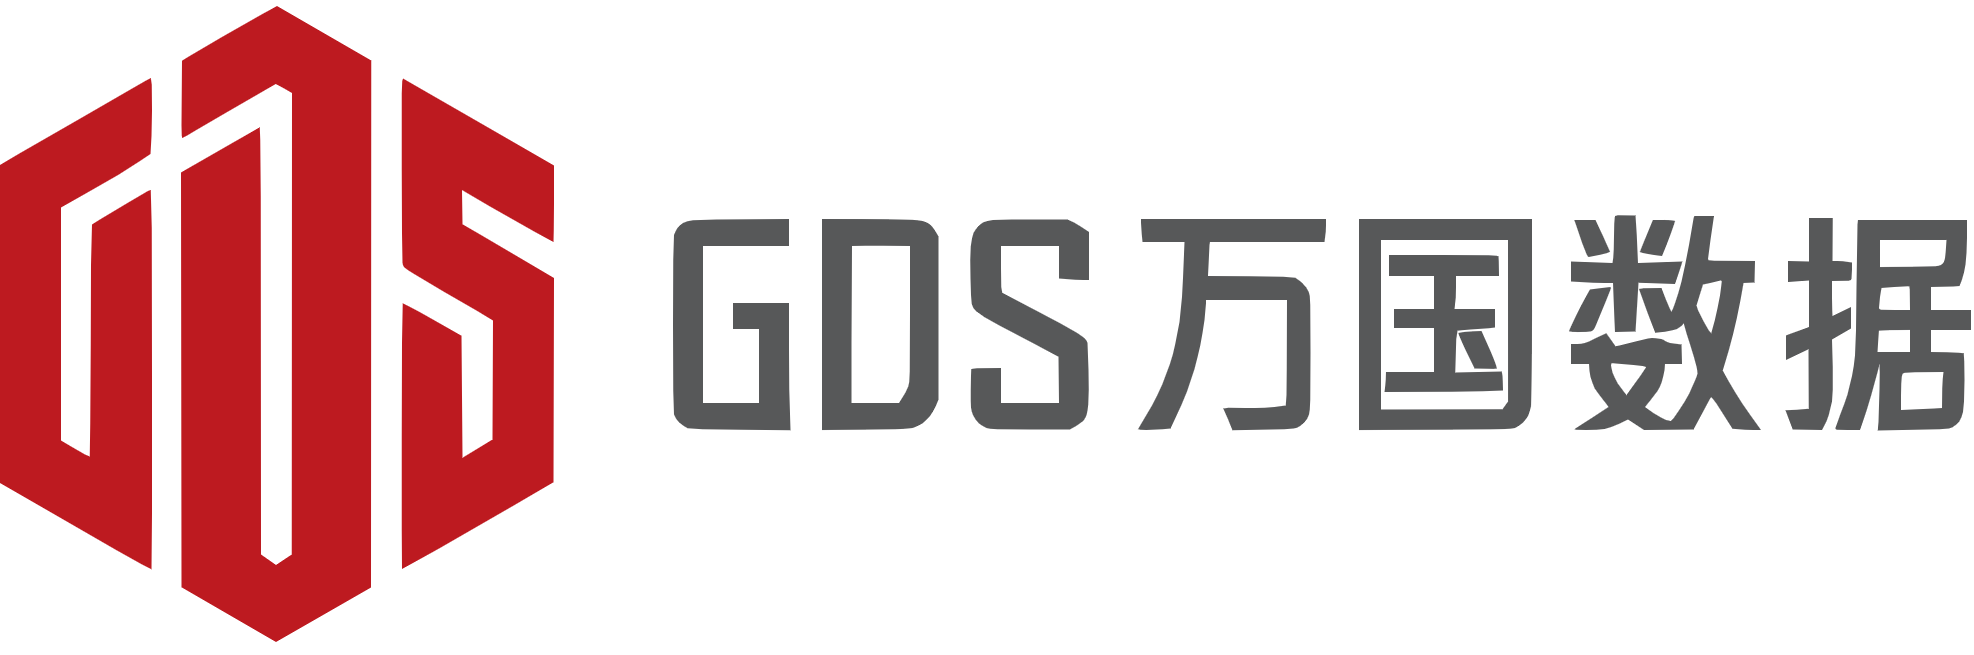 GDS Holdings logo large (transparent PNG)